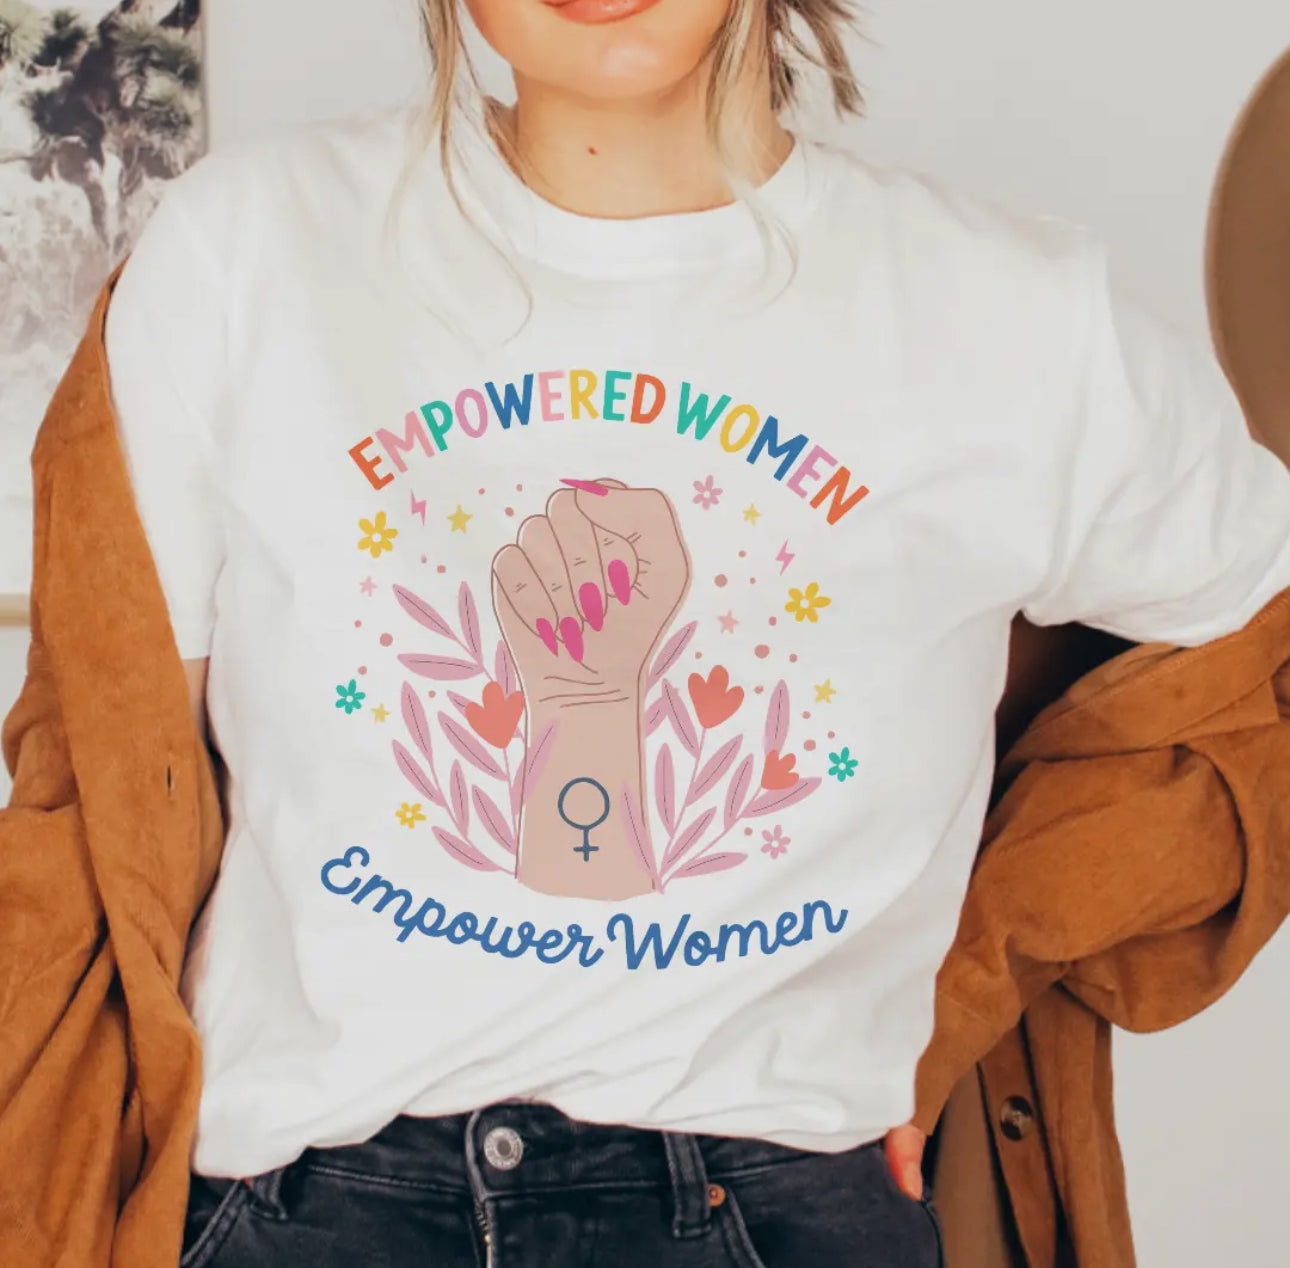 Empowered Women Empower Women
Feminism Graphic Tshirt